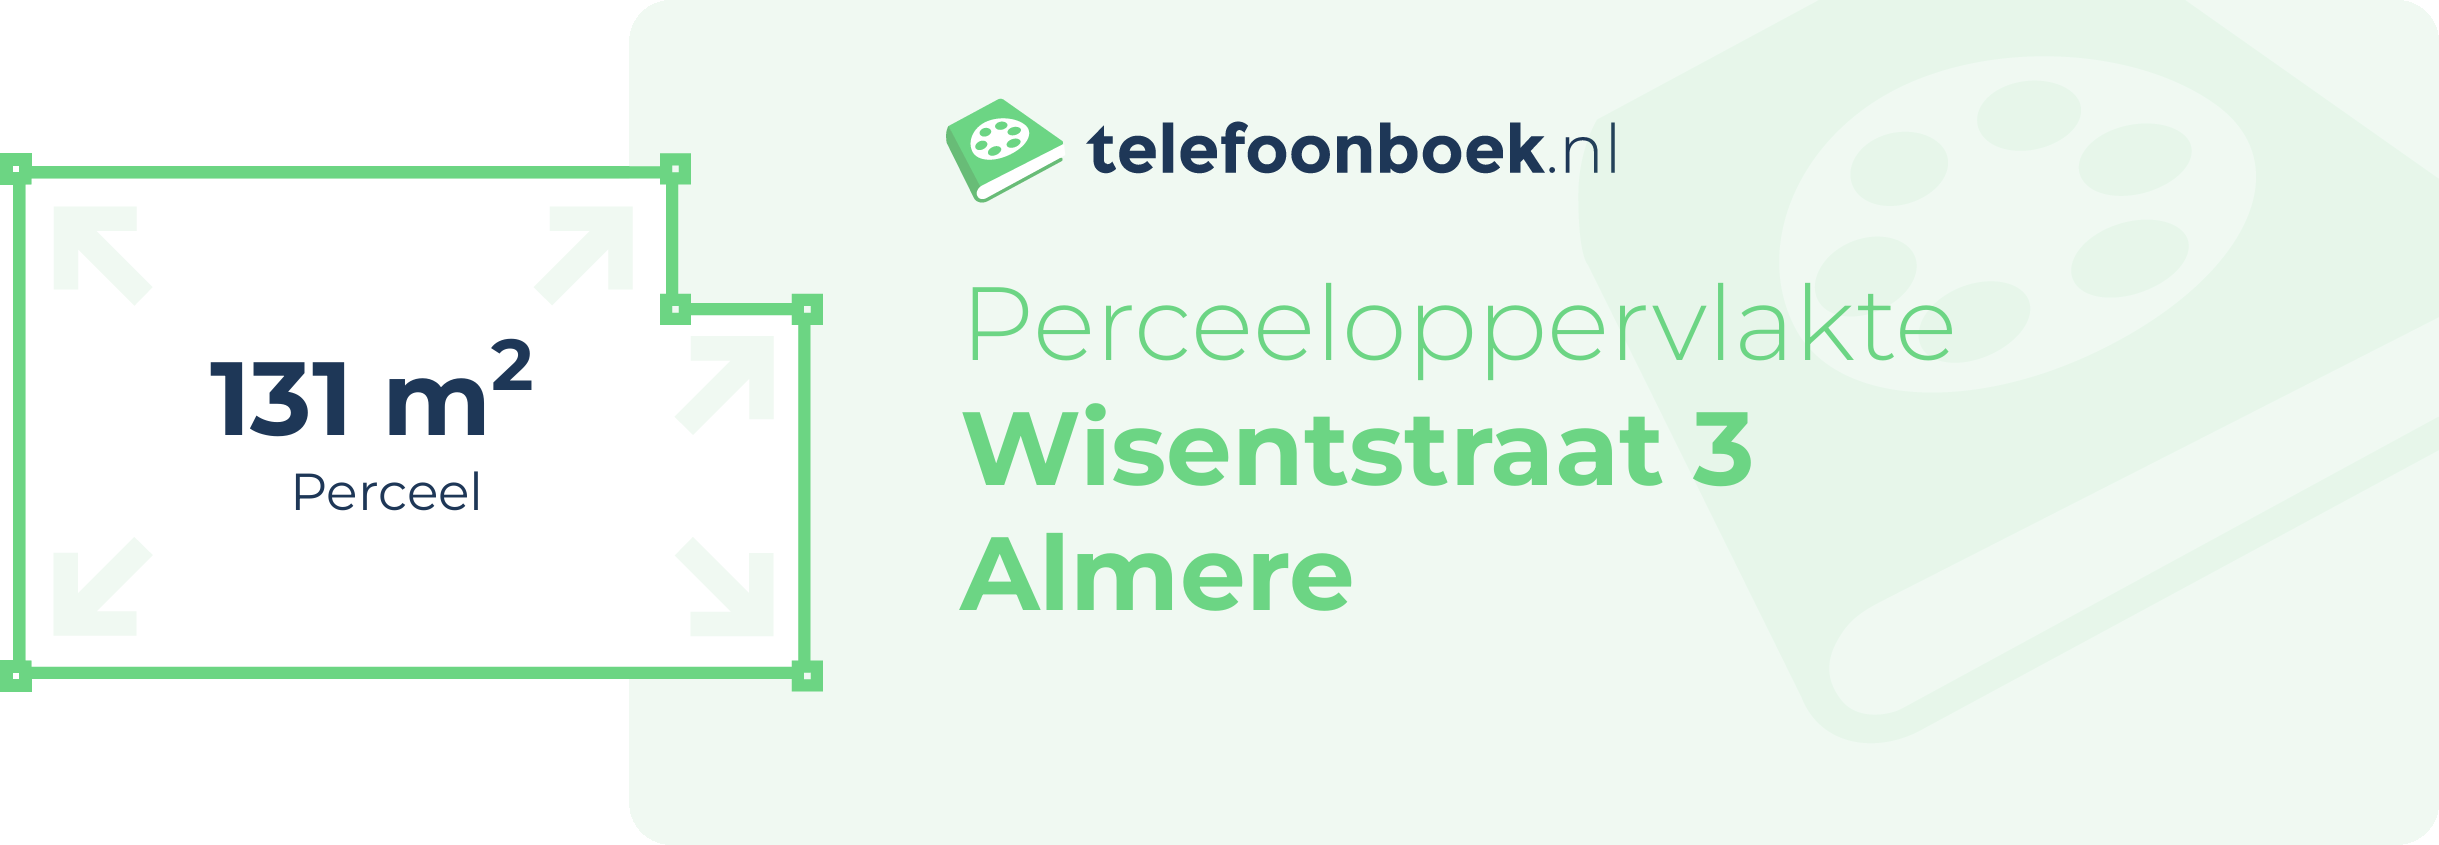 Perceeloppervlakte Wisentstraat 3 Almere